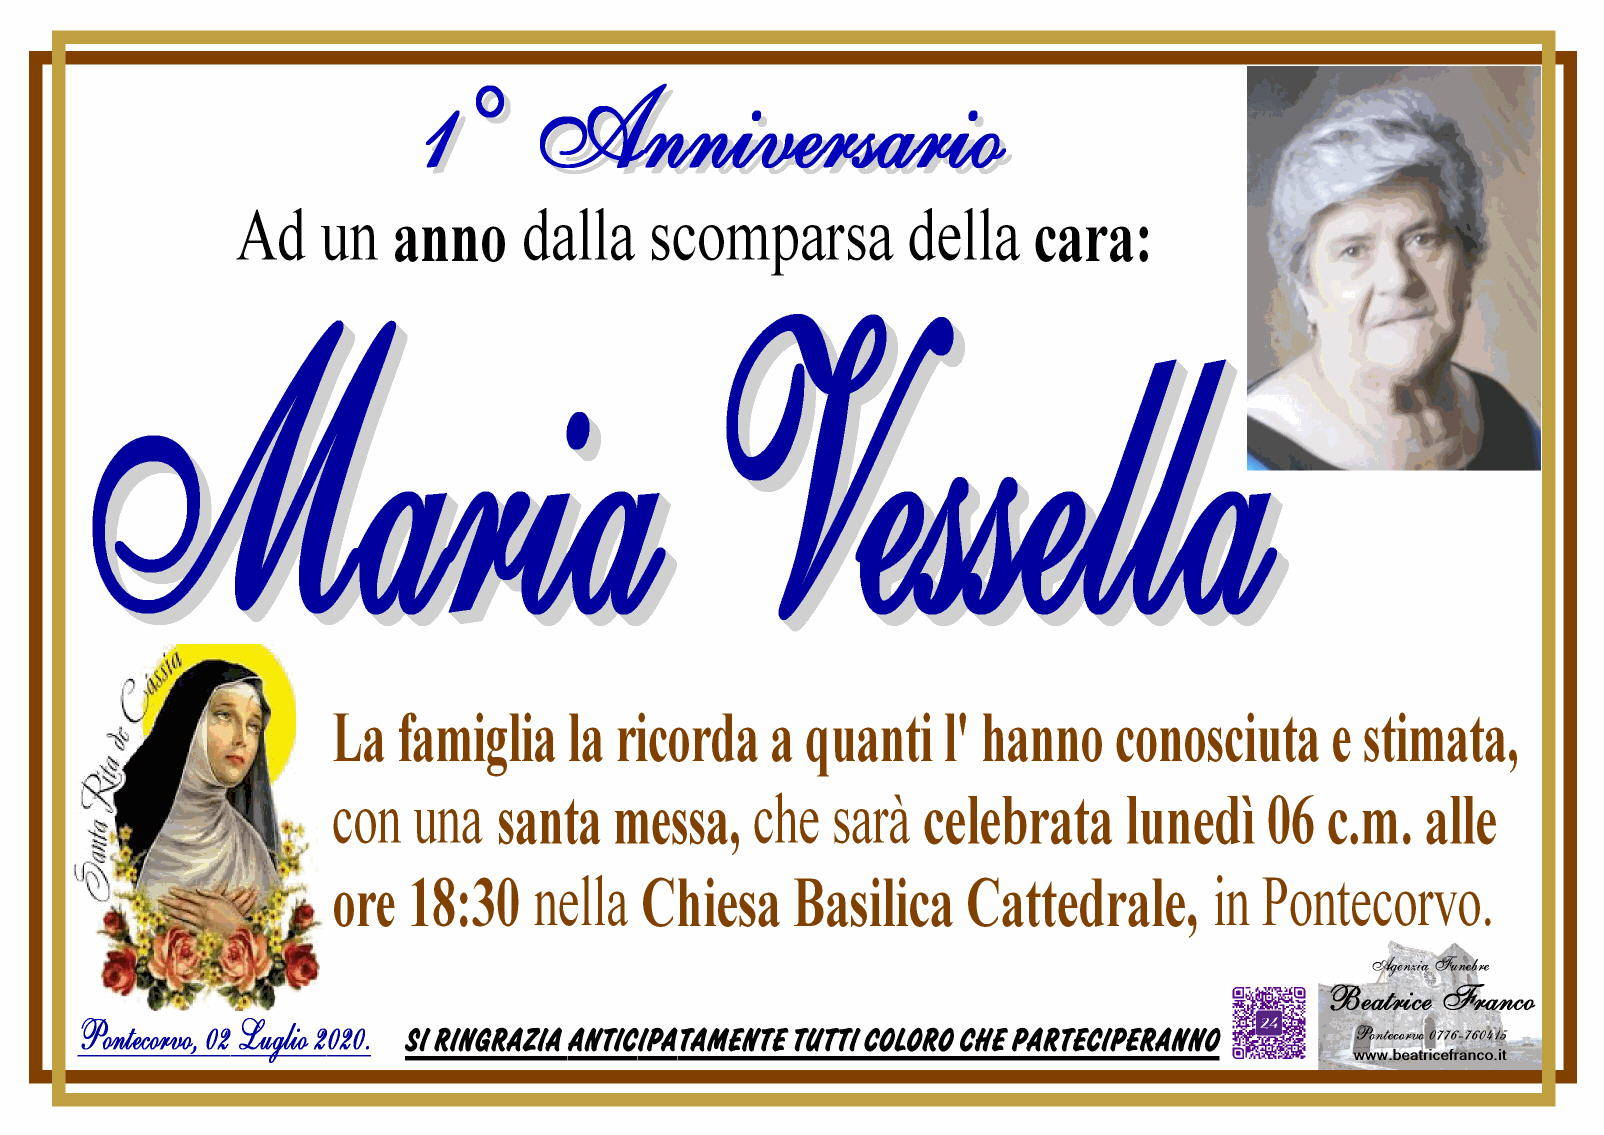 Maria Vincenza Vessella